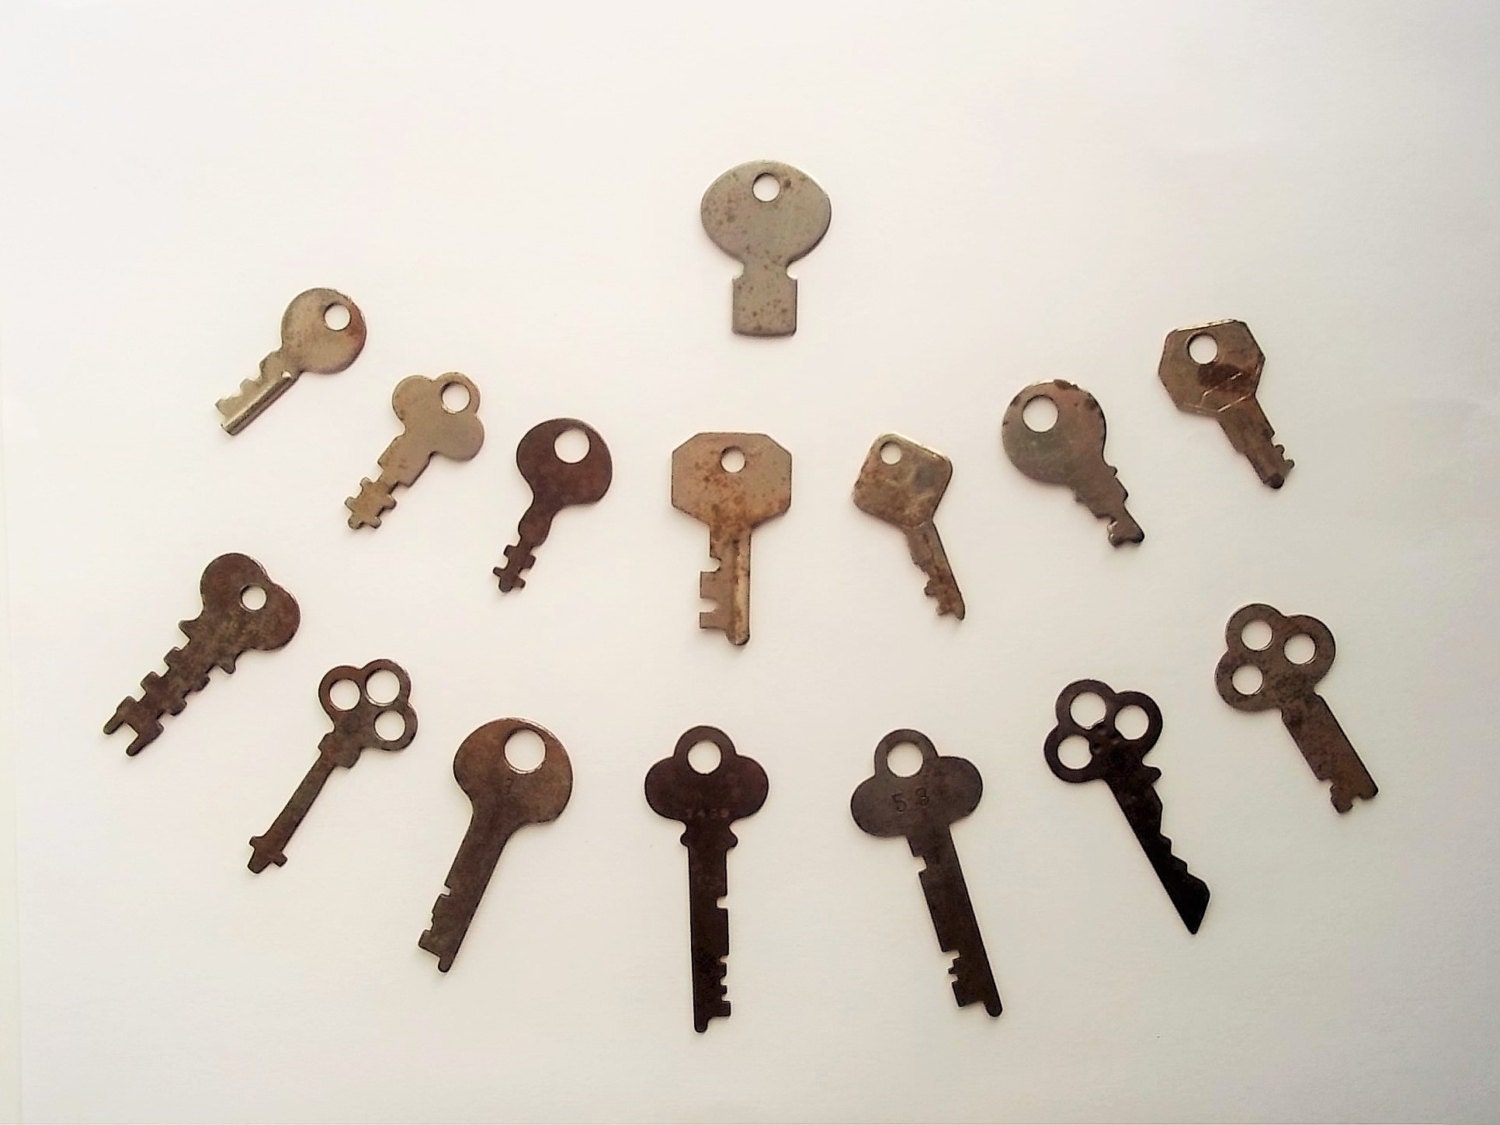 order of flat keys